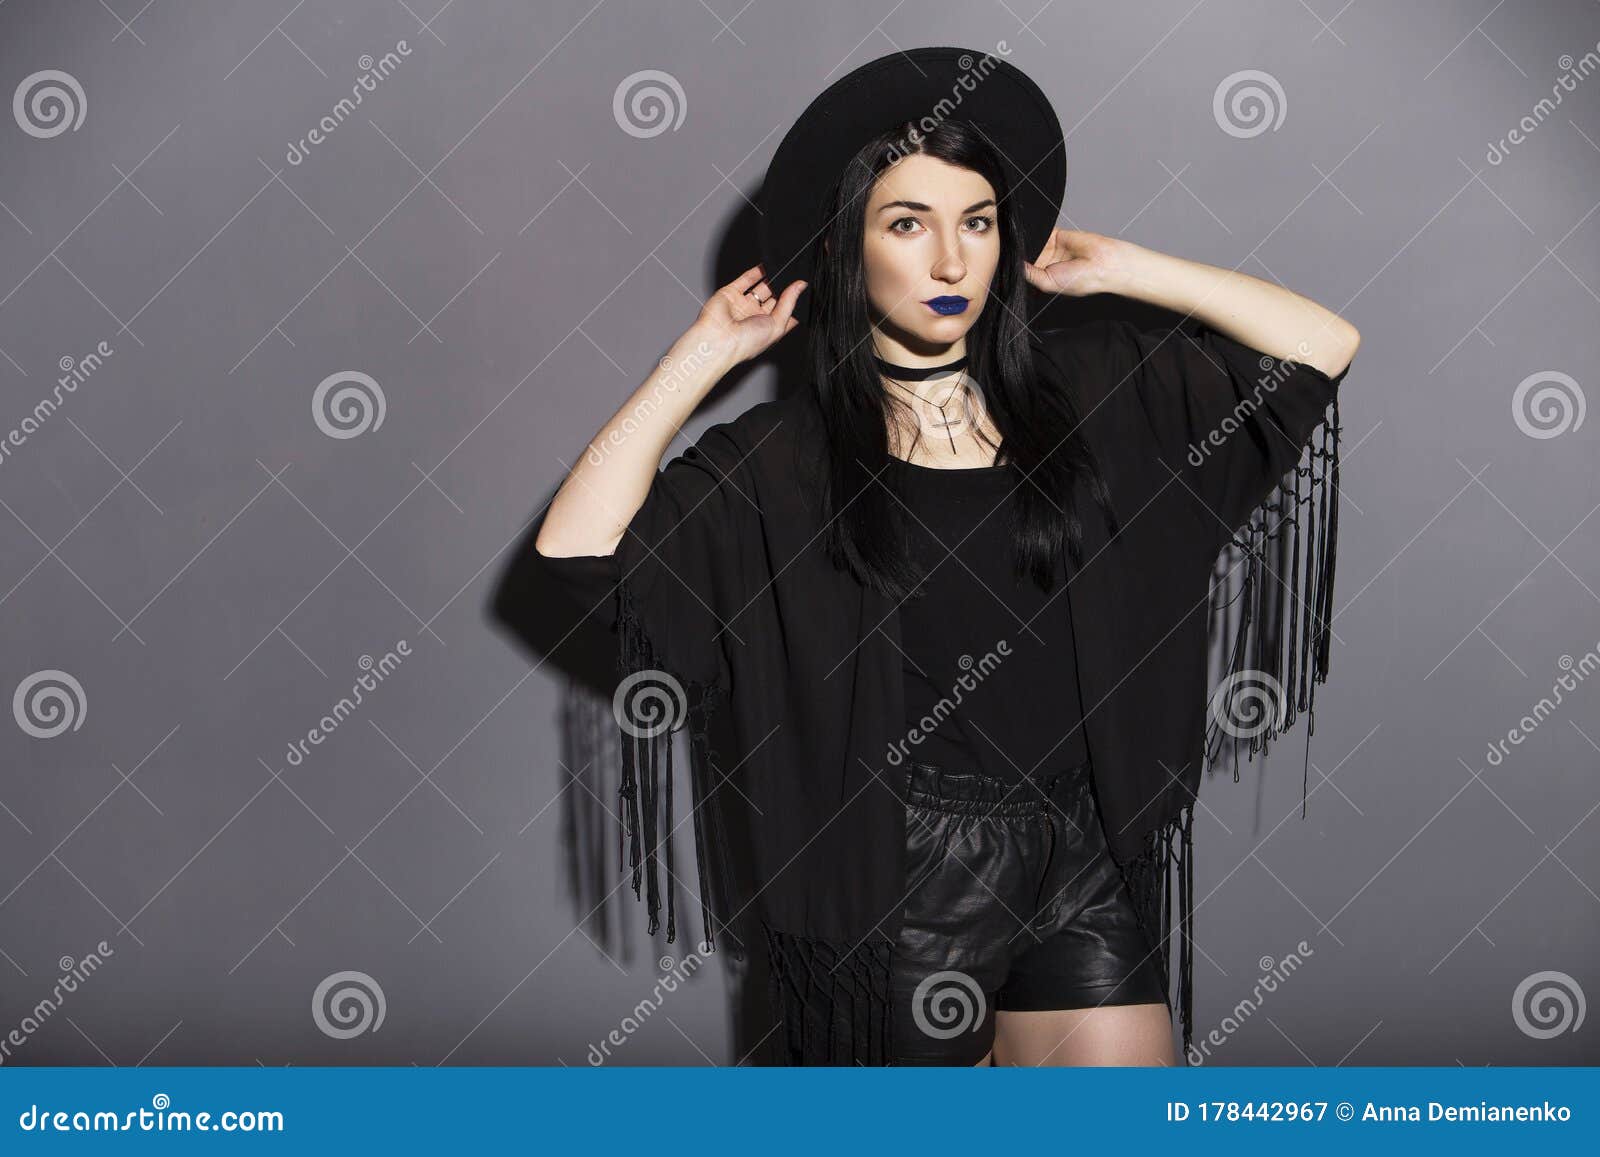 Gothic Caucasian Woman in Dark Dress on a Grey Neutral Background ...